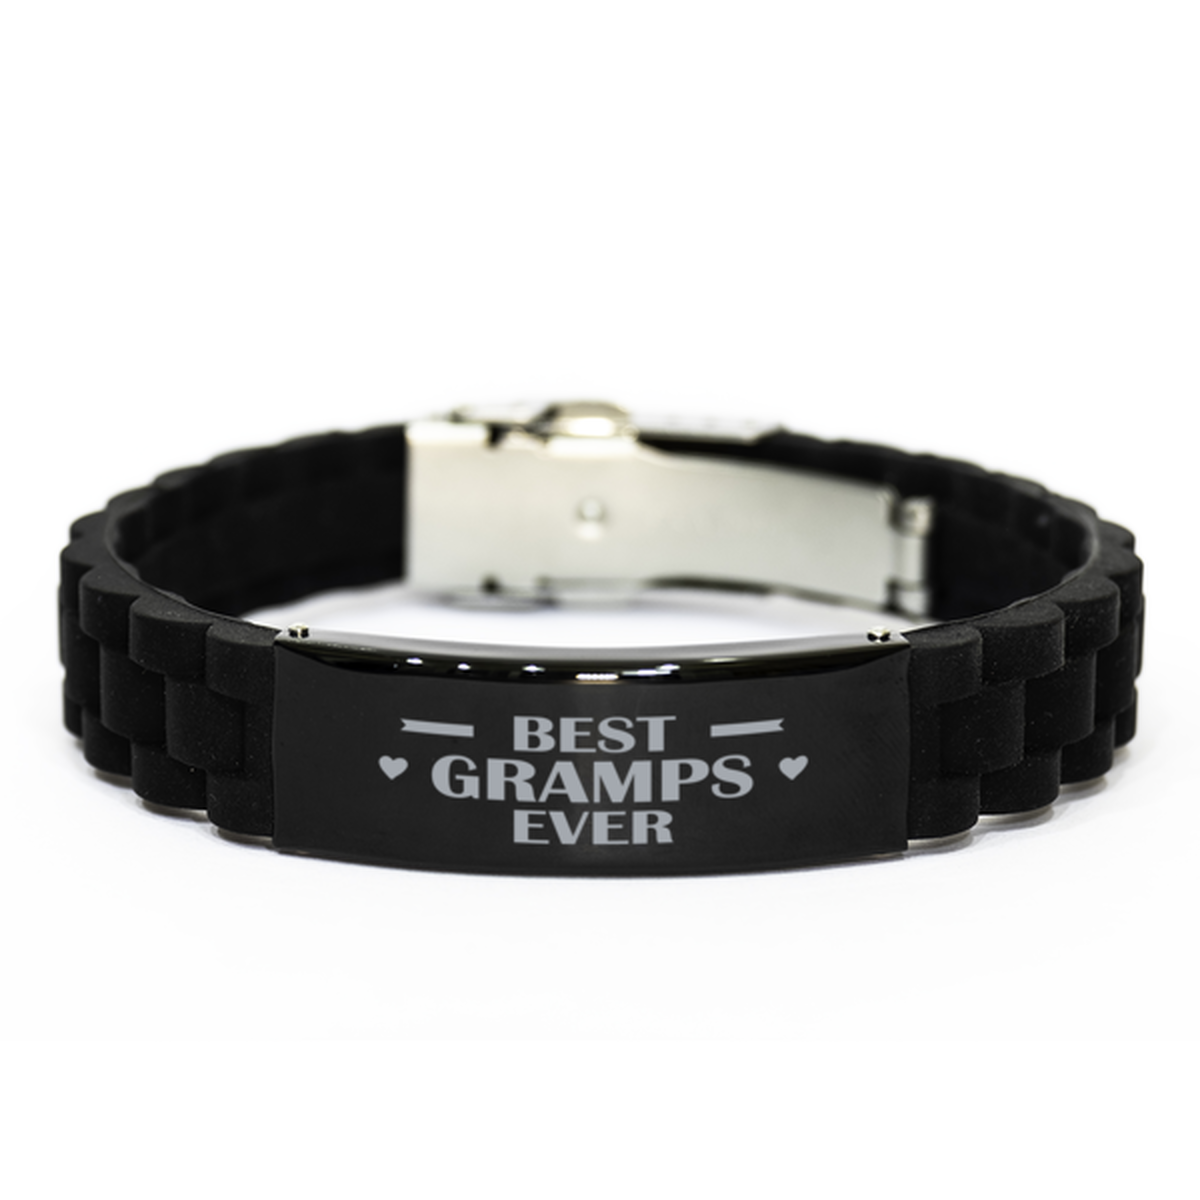 Best Gramps Ever Gramps Gifts, Funny Black Engraved Bracelet For Gramps, Family Gifts For Women